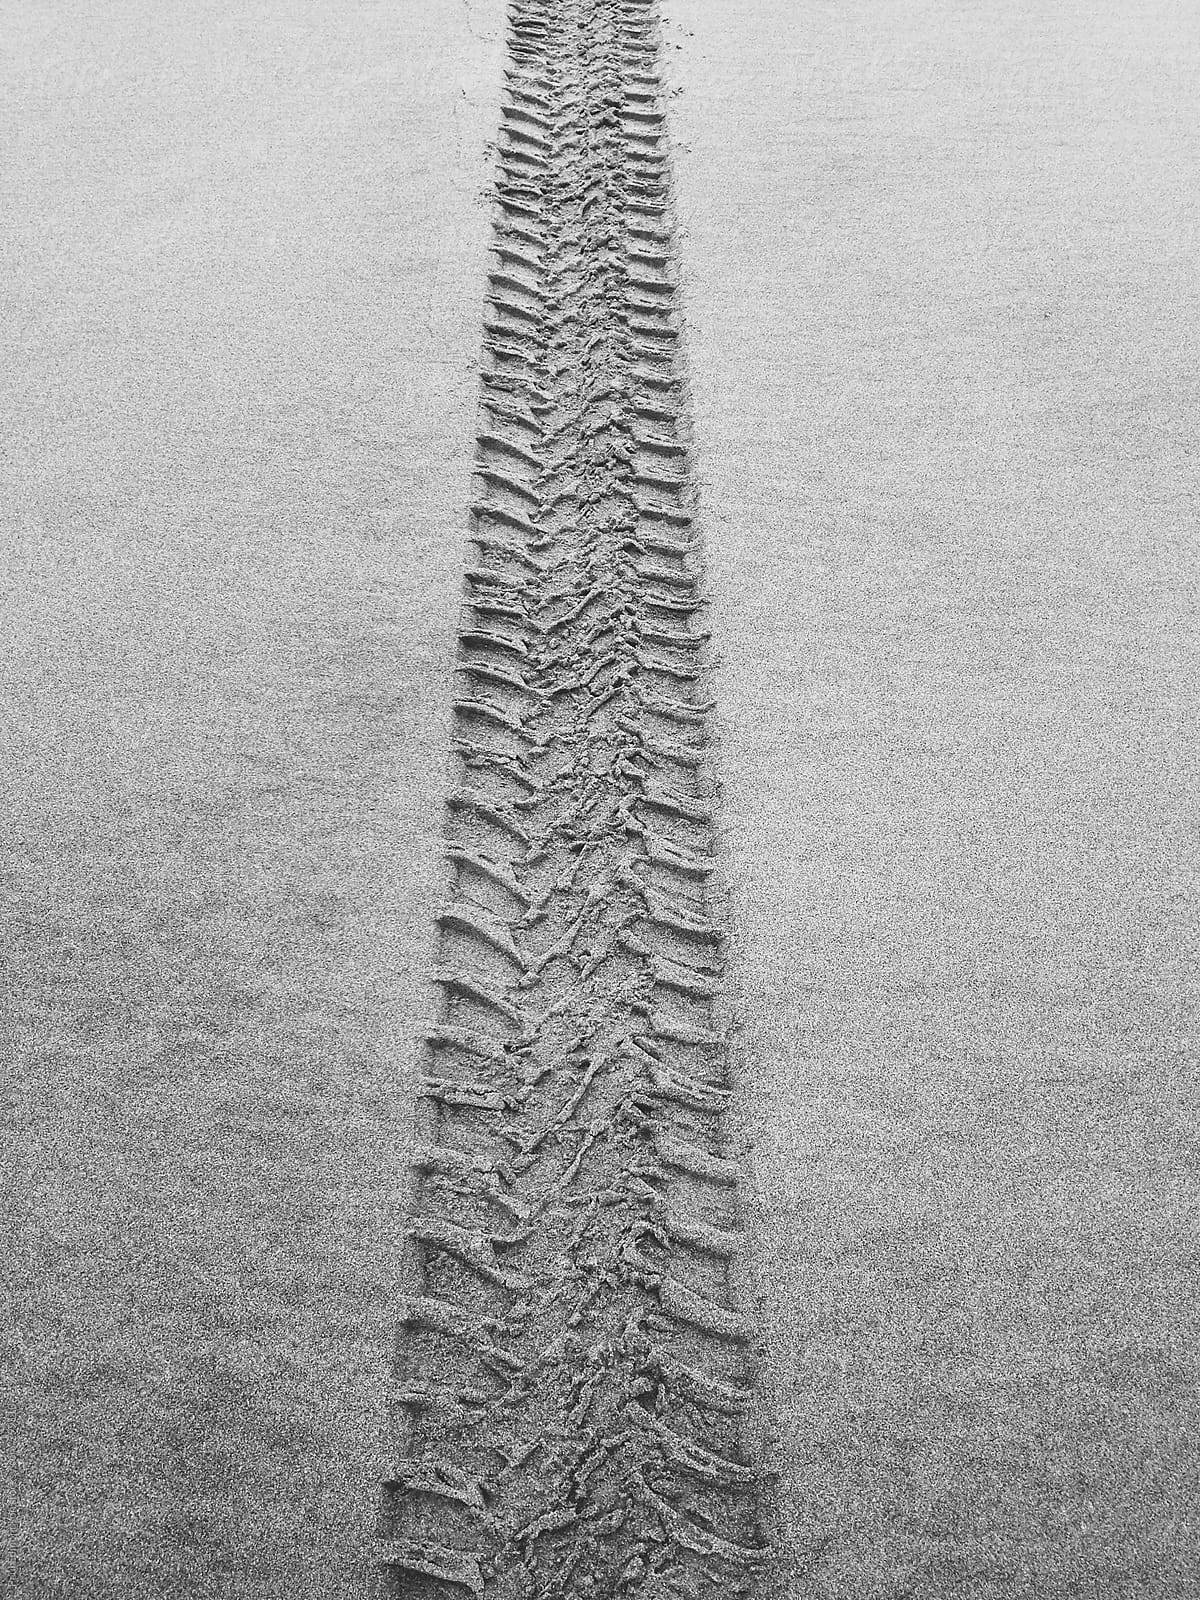 Tire tracks on sand at beach, Long Beach Peninsula, WA